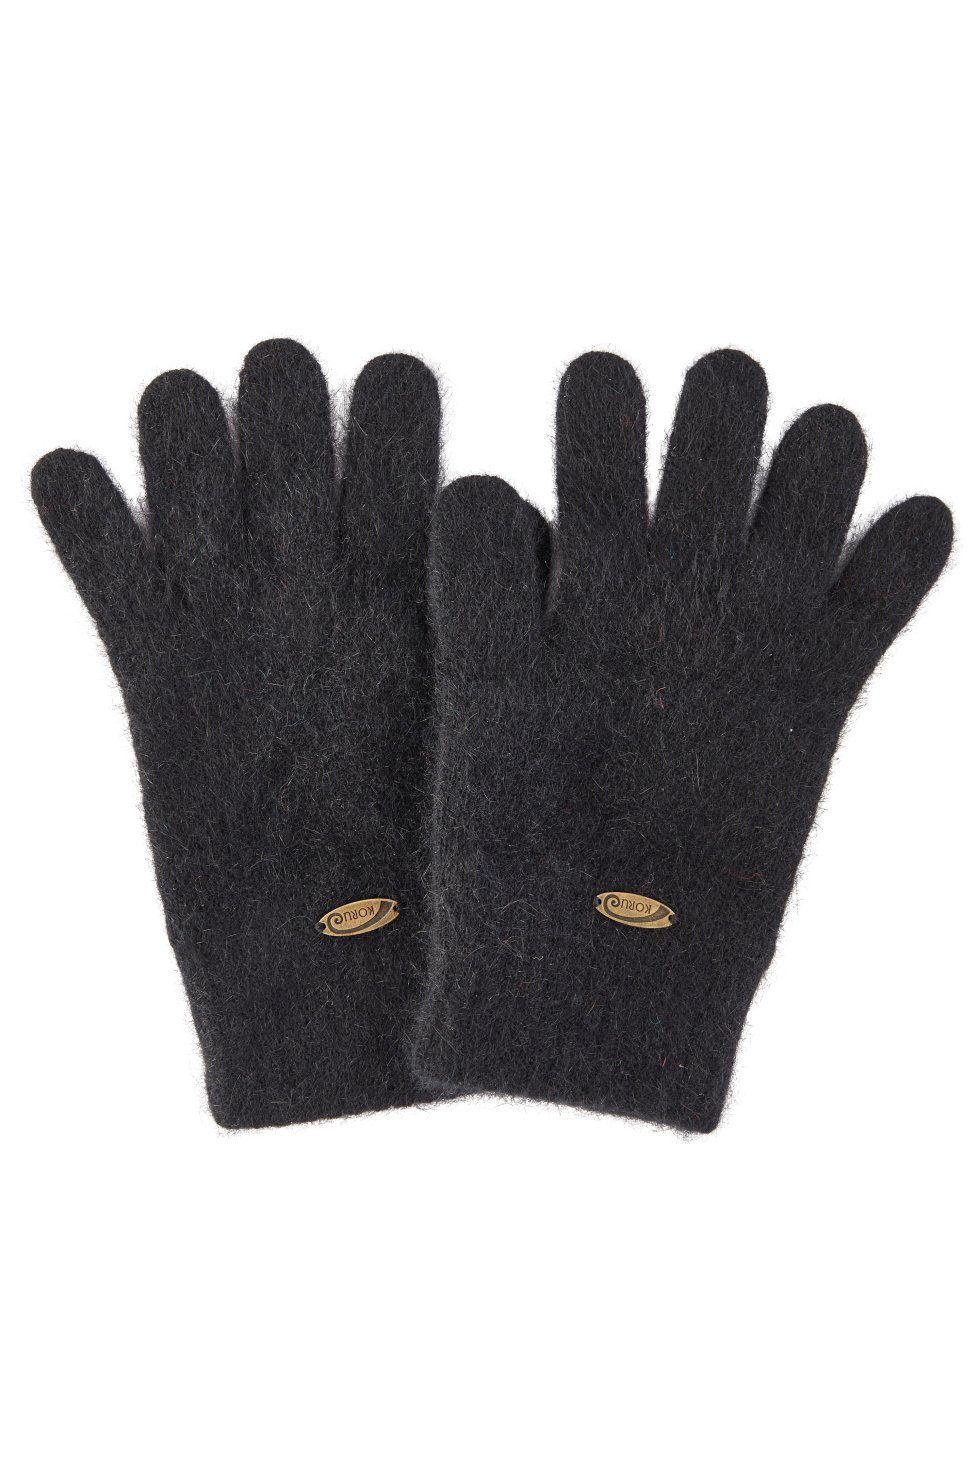 Koru Knitwear Strickhandschuhe aus der Possumhaarfaser schwarz Handschuhe